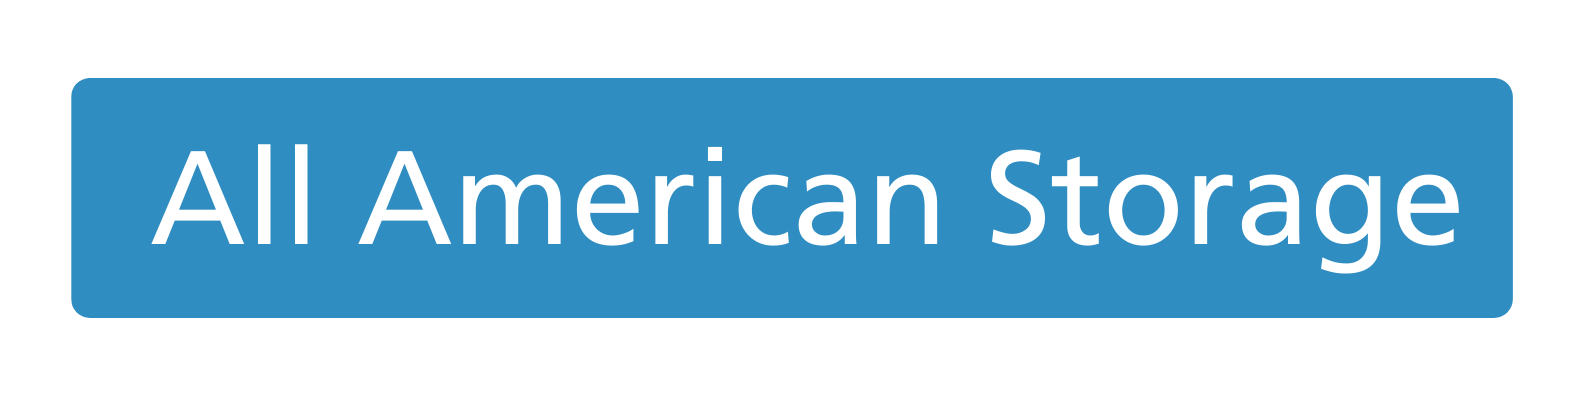 All American Storage Fontana Fontana CA logo